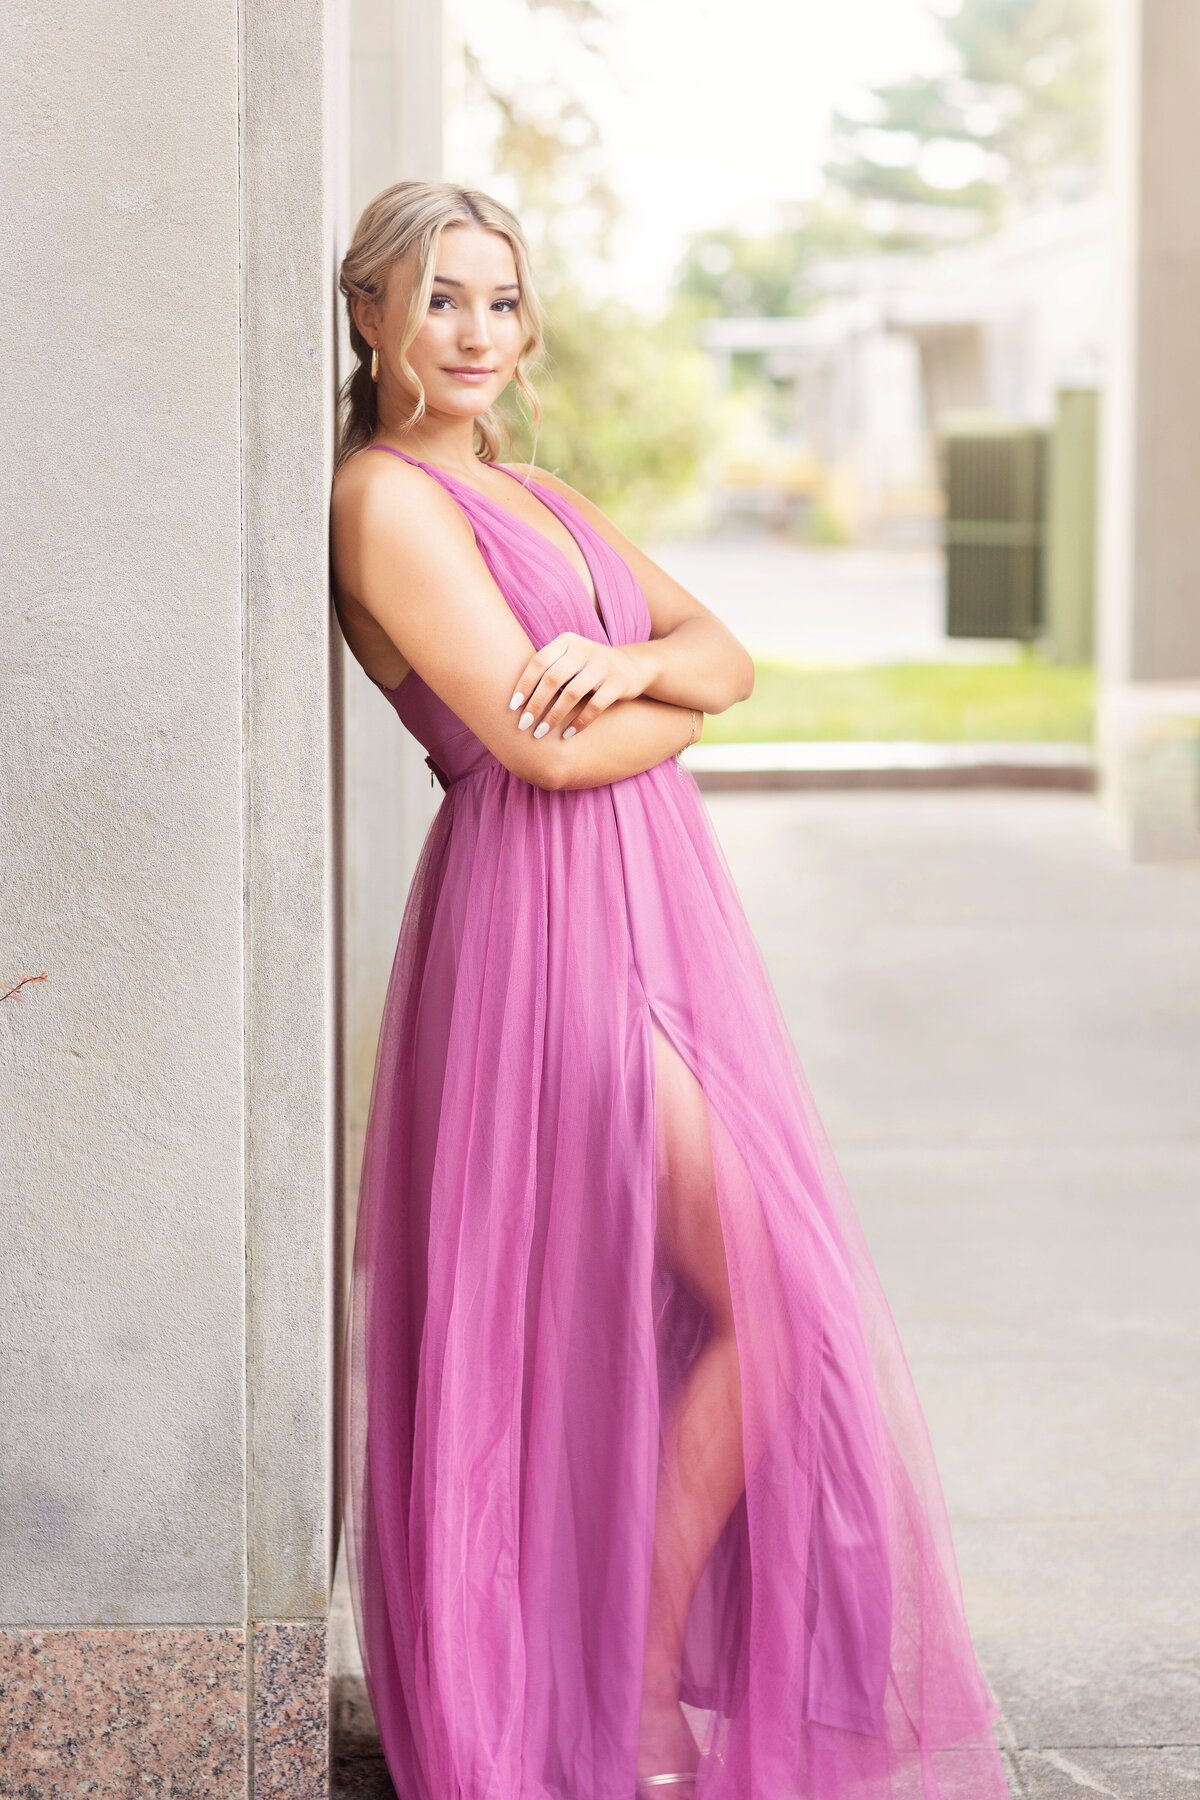 girl in flowy pink dress downtown - Kristen Zannella Photography